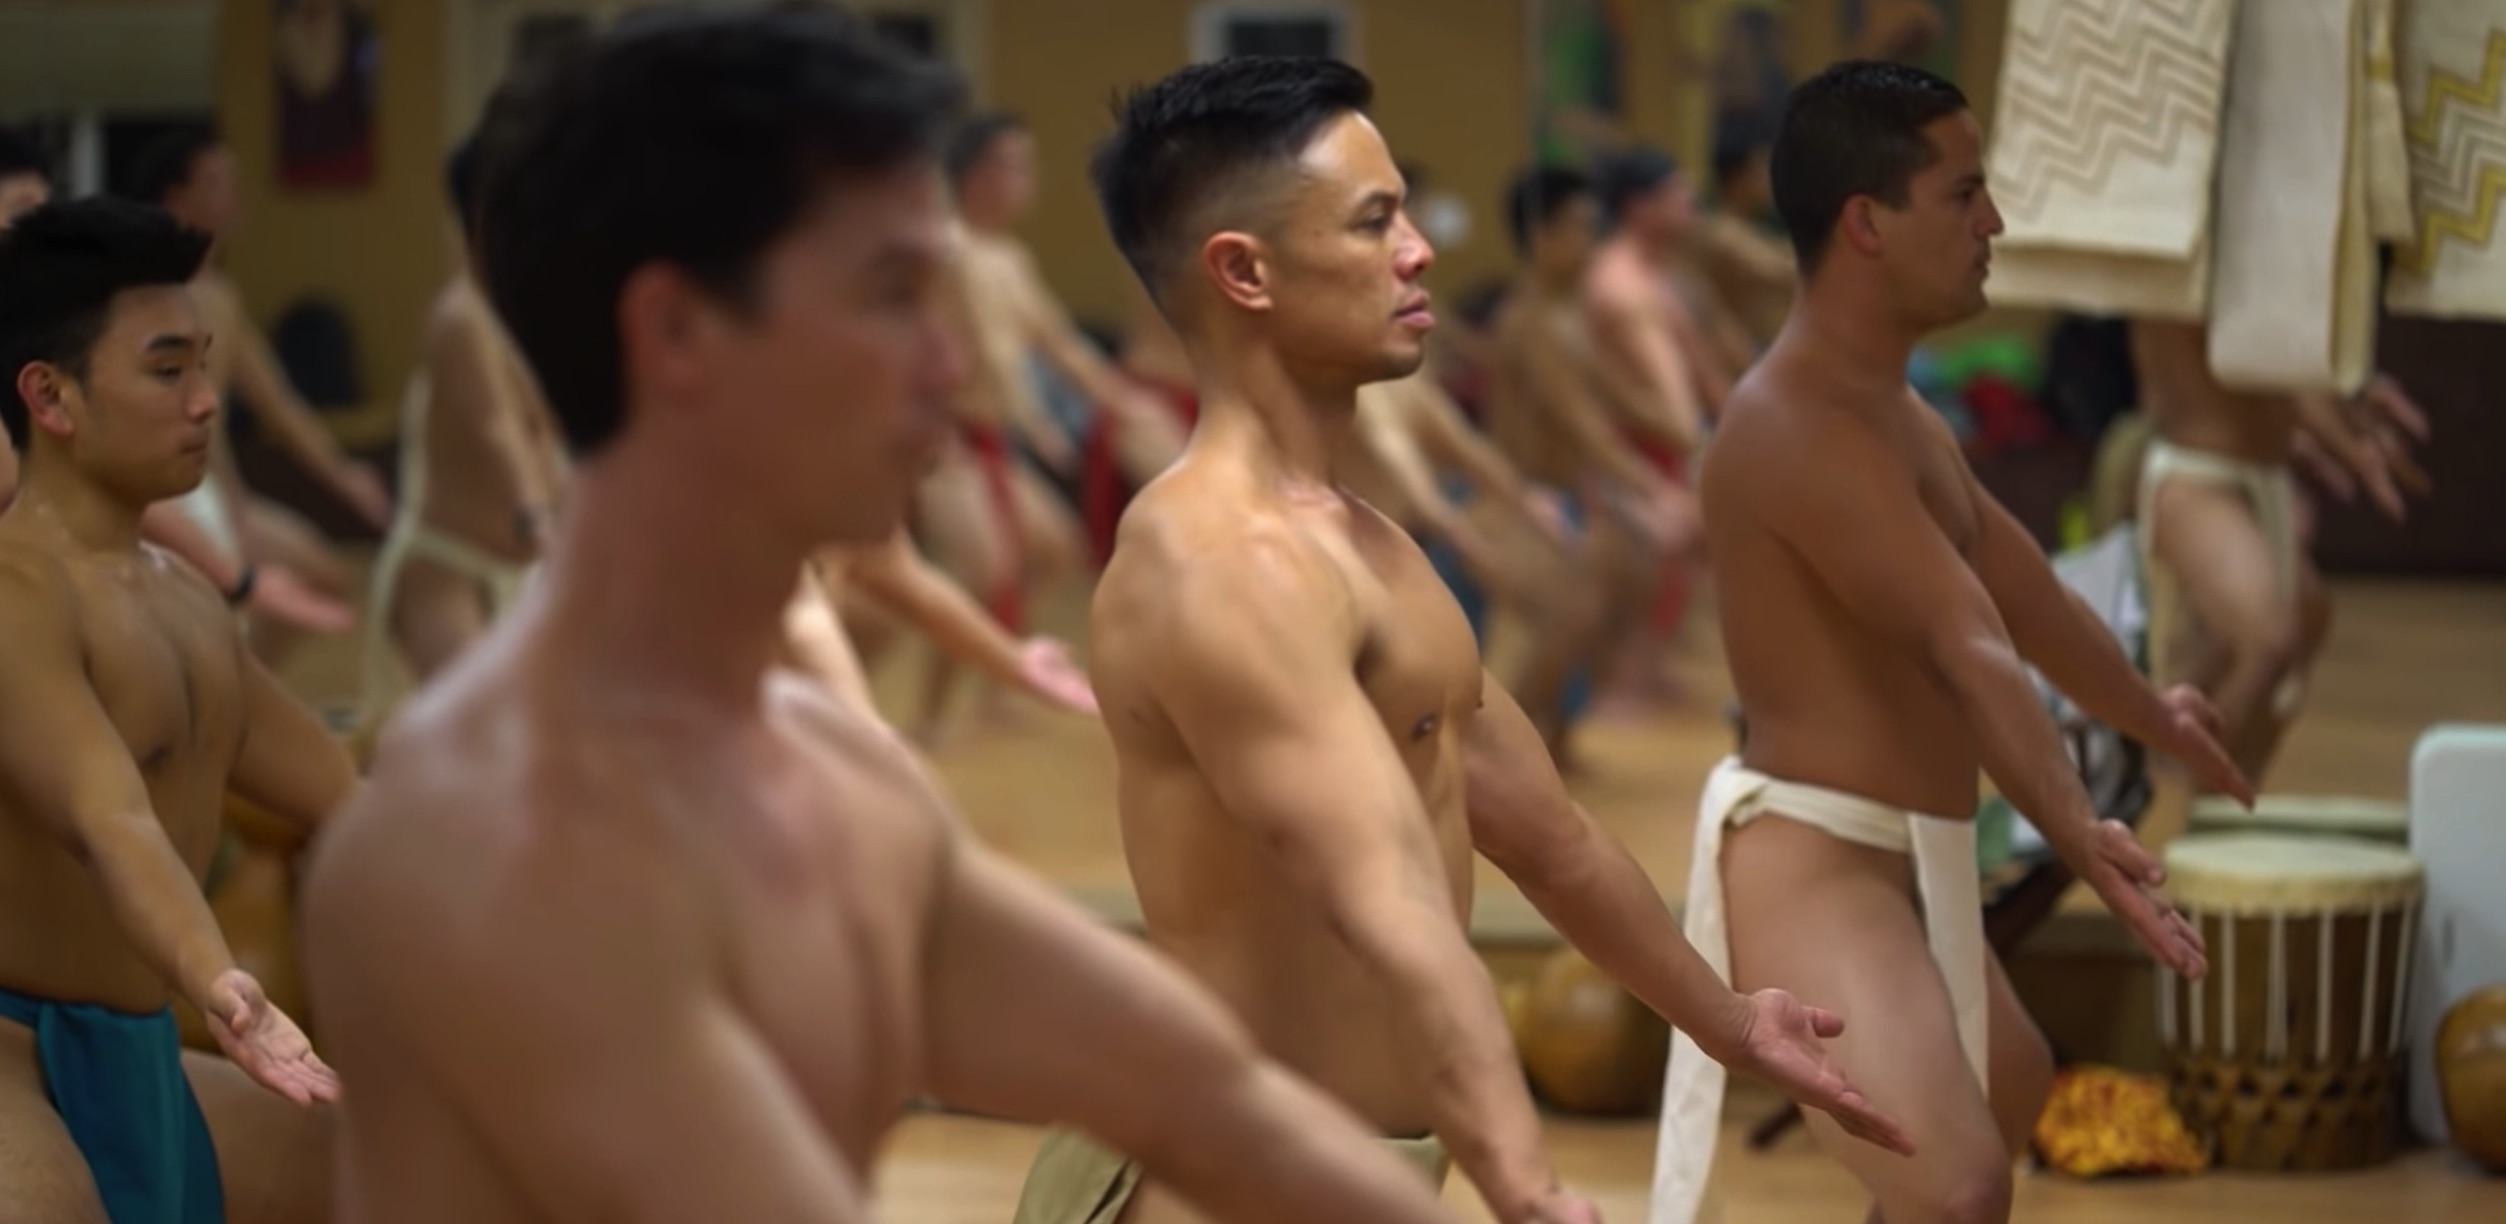 Hula Dance Nude Porn - Beautiful men rehearse hula dancing (brief, no sex) - ThisVid.com